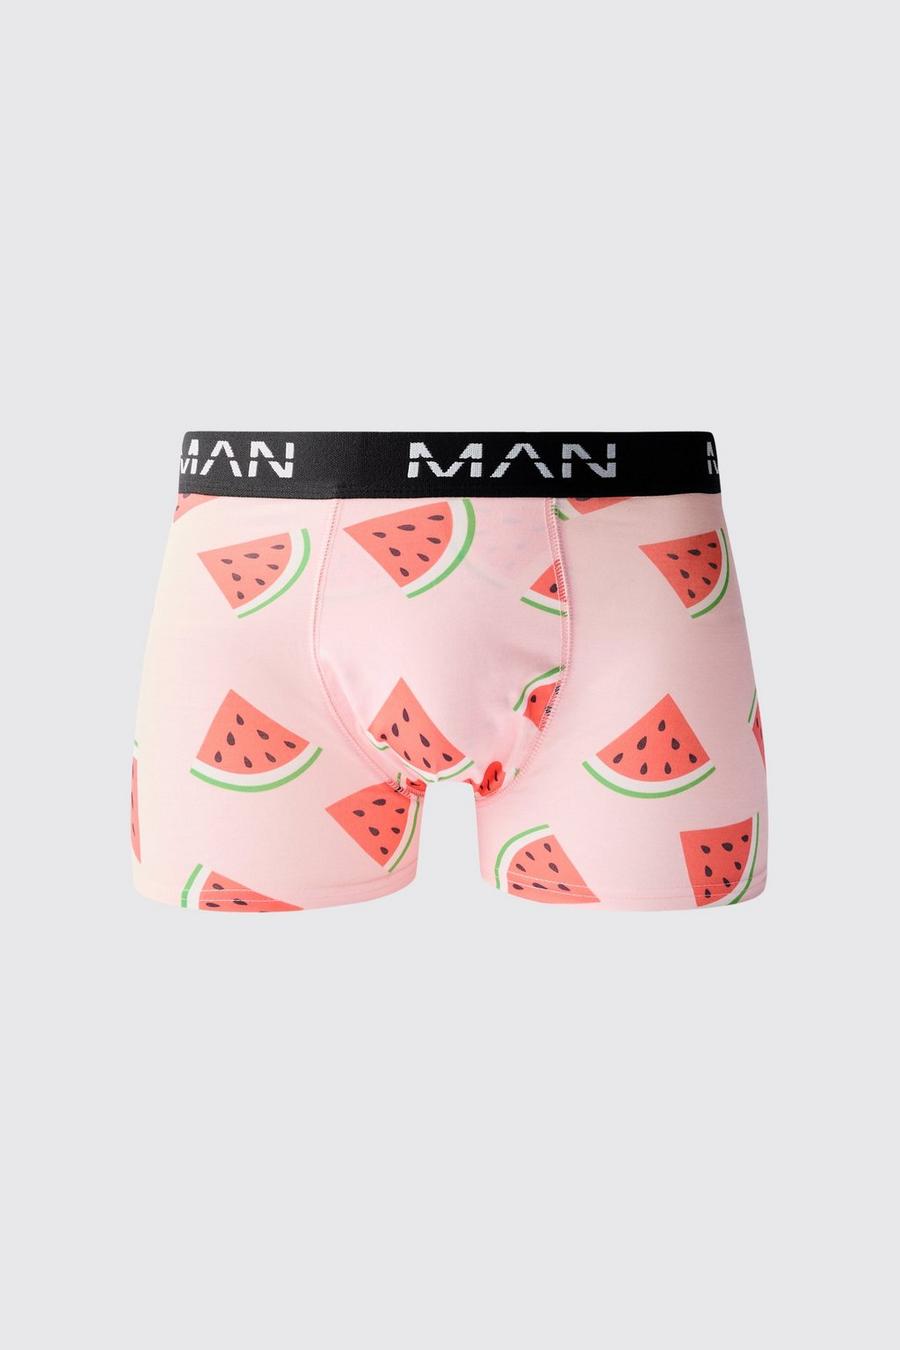 Man Watermelon Slice Printed Boxers